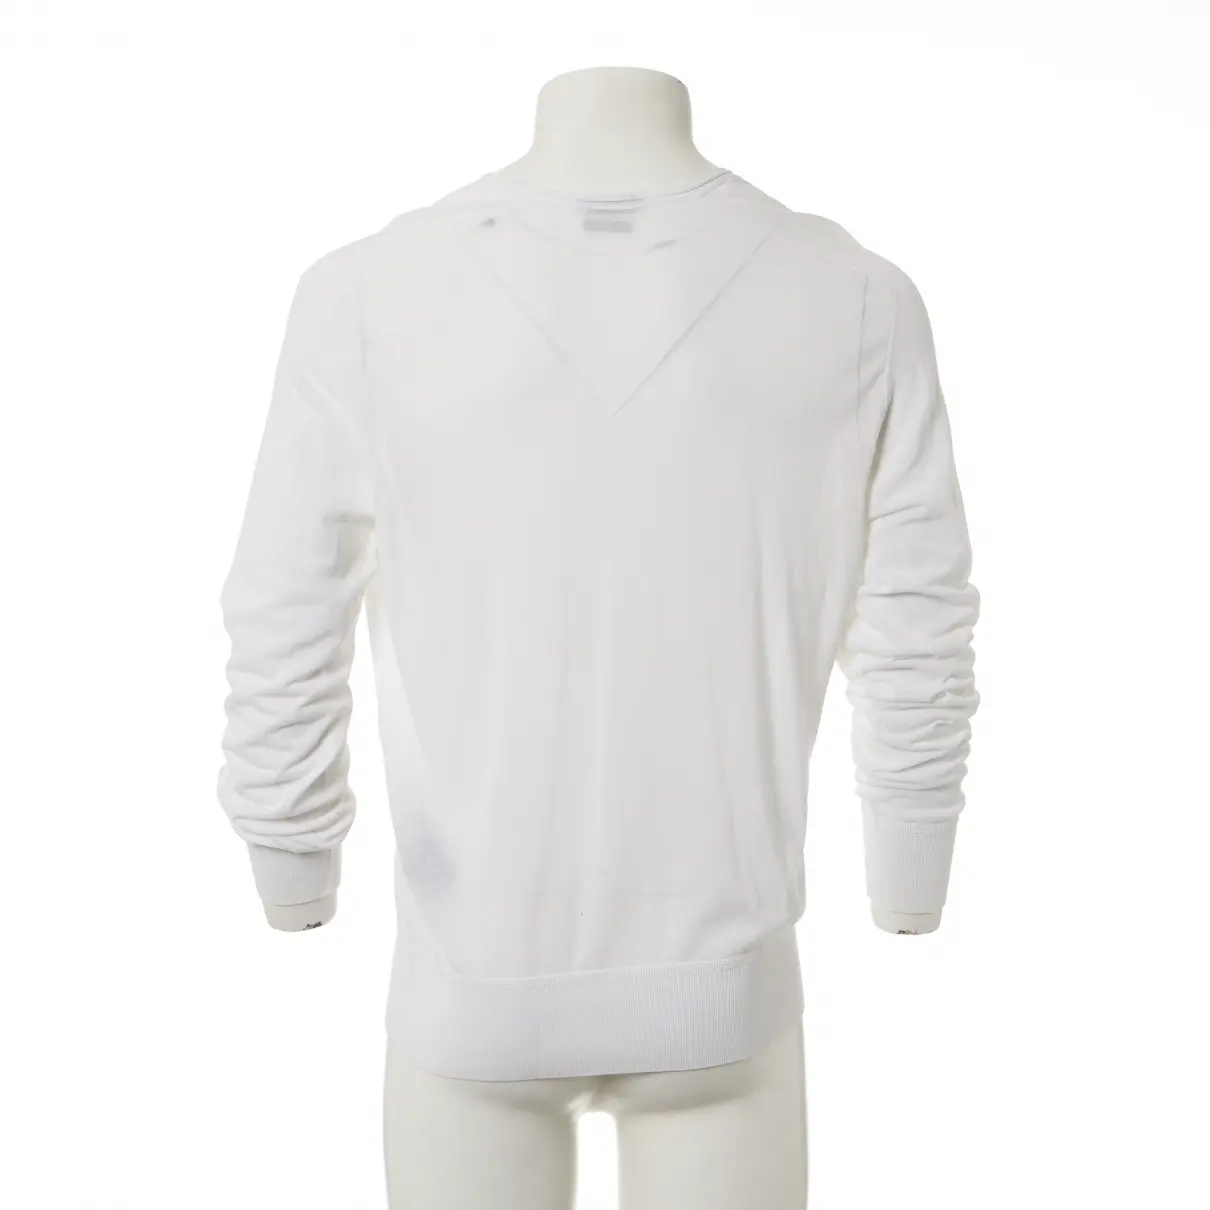 Buy Tom Ford White Cotton Knitwear & Sweatshirt online